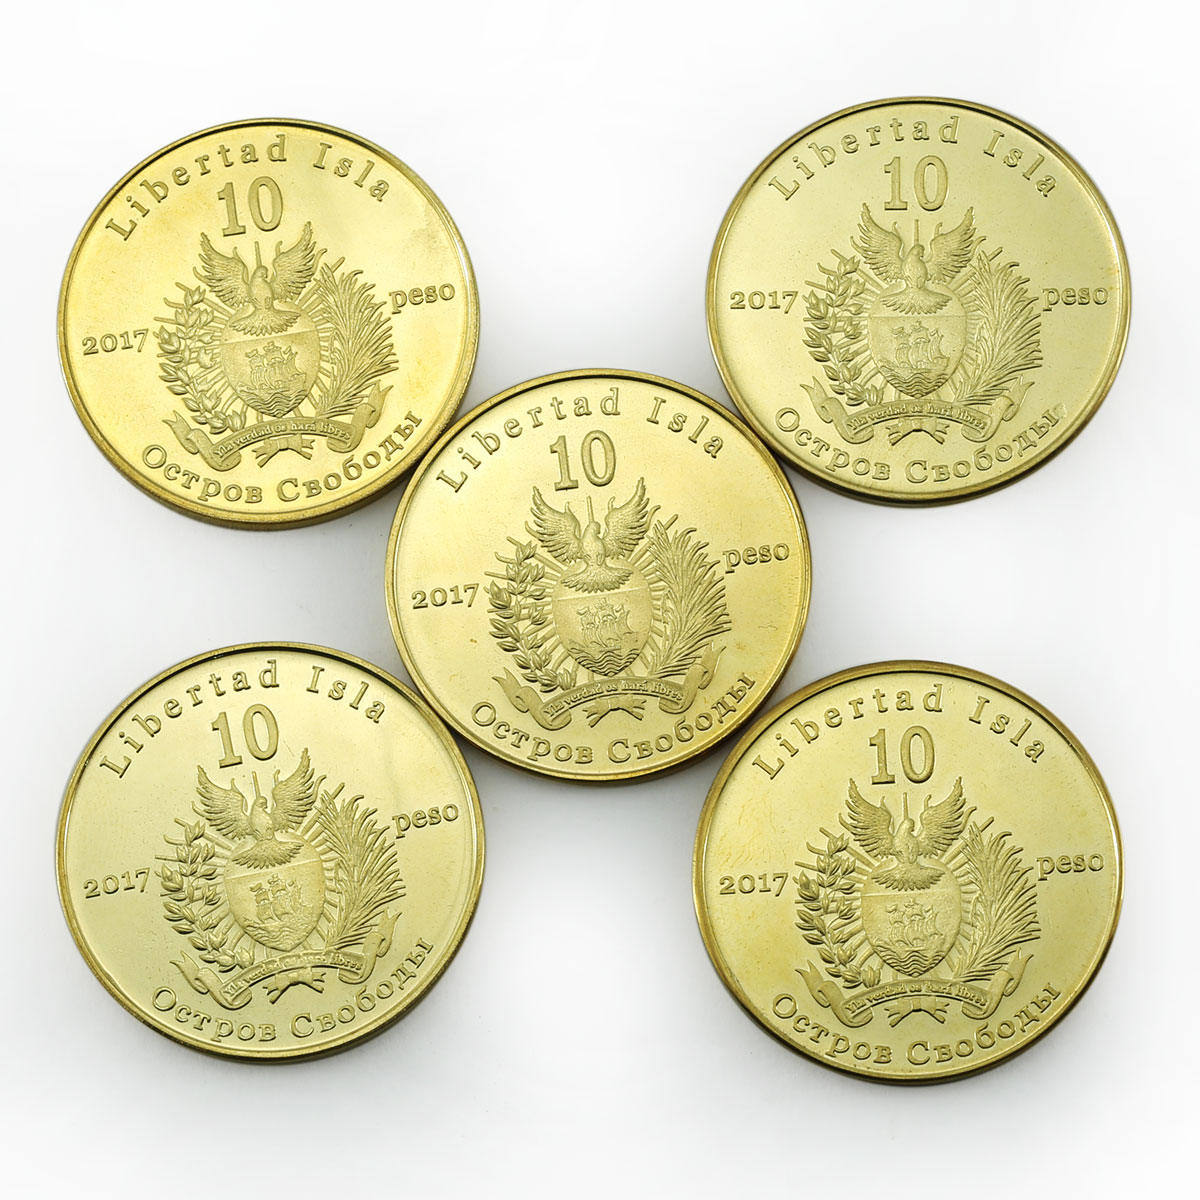 Liberty Island 10 pesos Russian football FIFA soccer sport set of 5 coins 2017